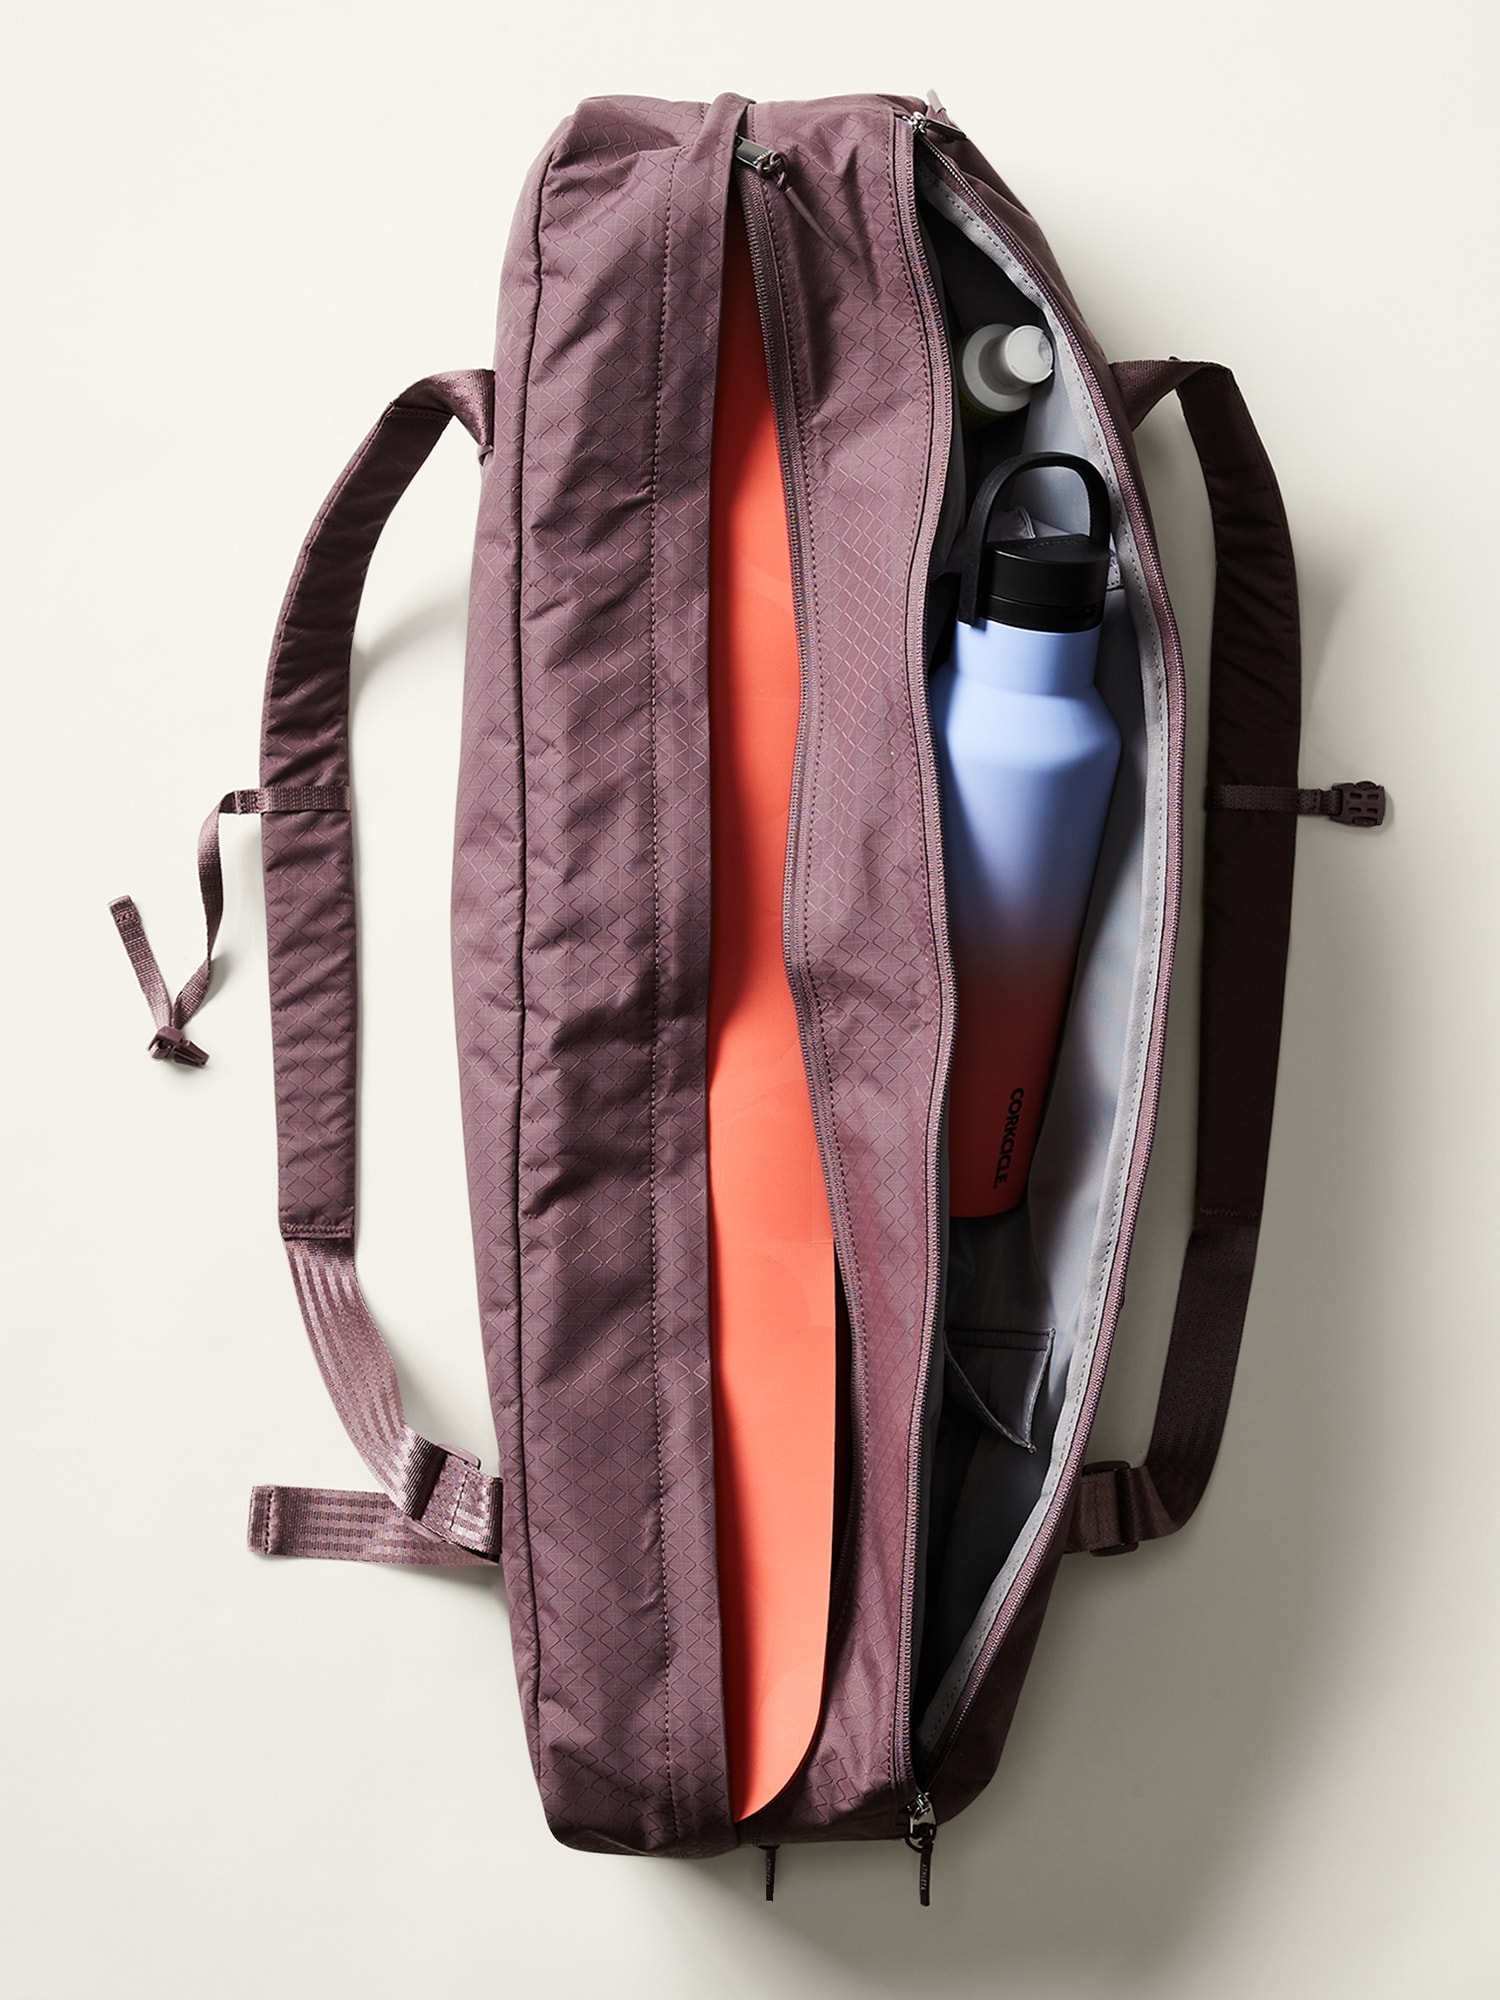 KEEMARU Yoga Mat Bag - Multipurpose Shoulder Bag for Yoga - Fitness Gym  Pilates 